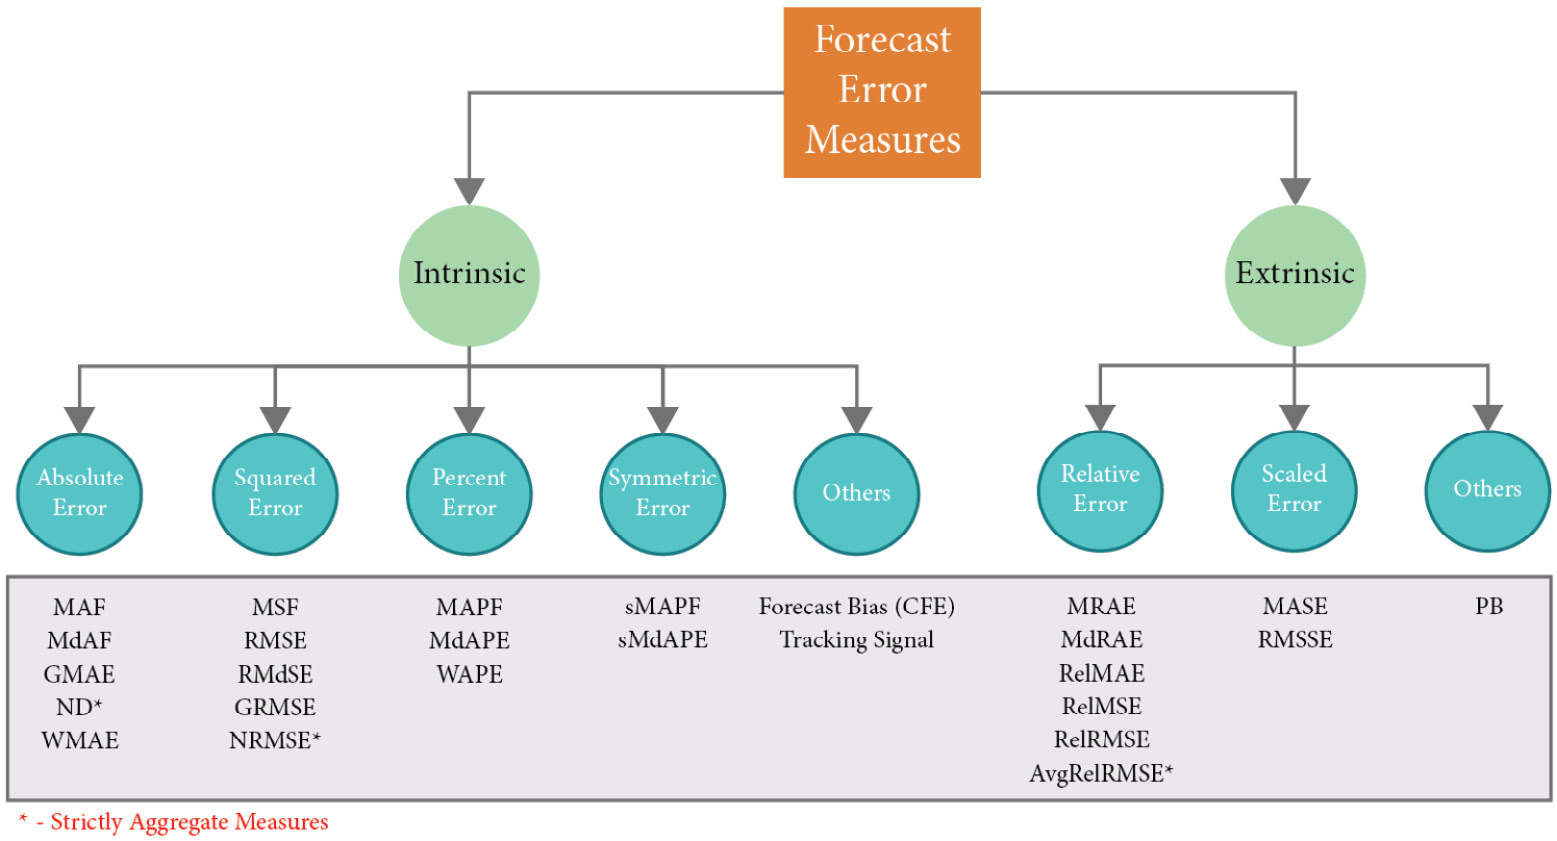 Figure 18.1 – Taxonomy of forecast error measures
